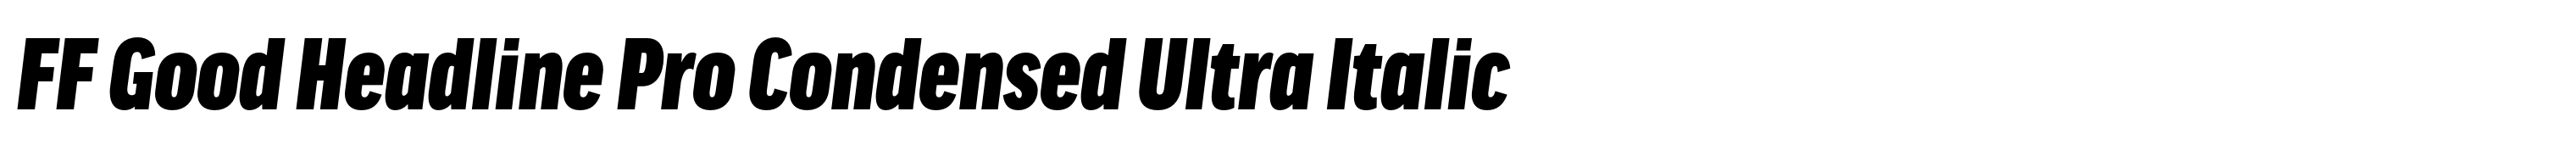 FF Good Headline Pro Condensed Ultra Italic